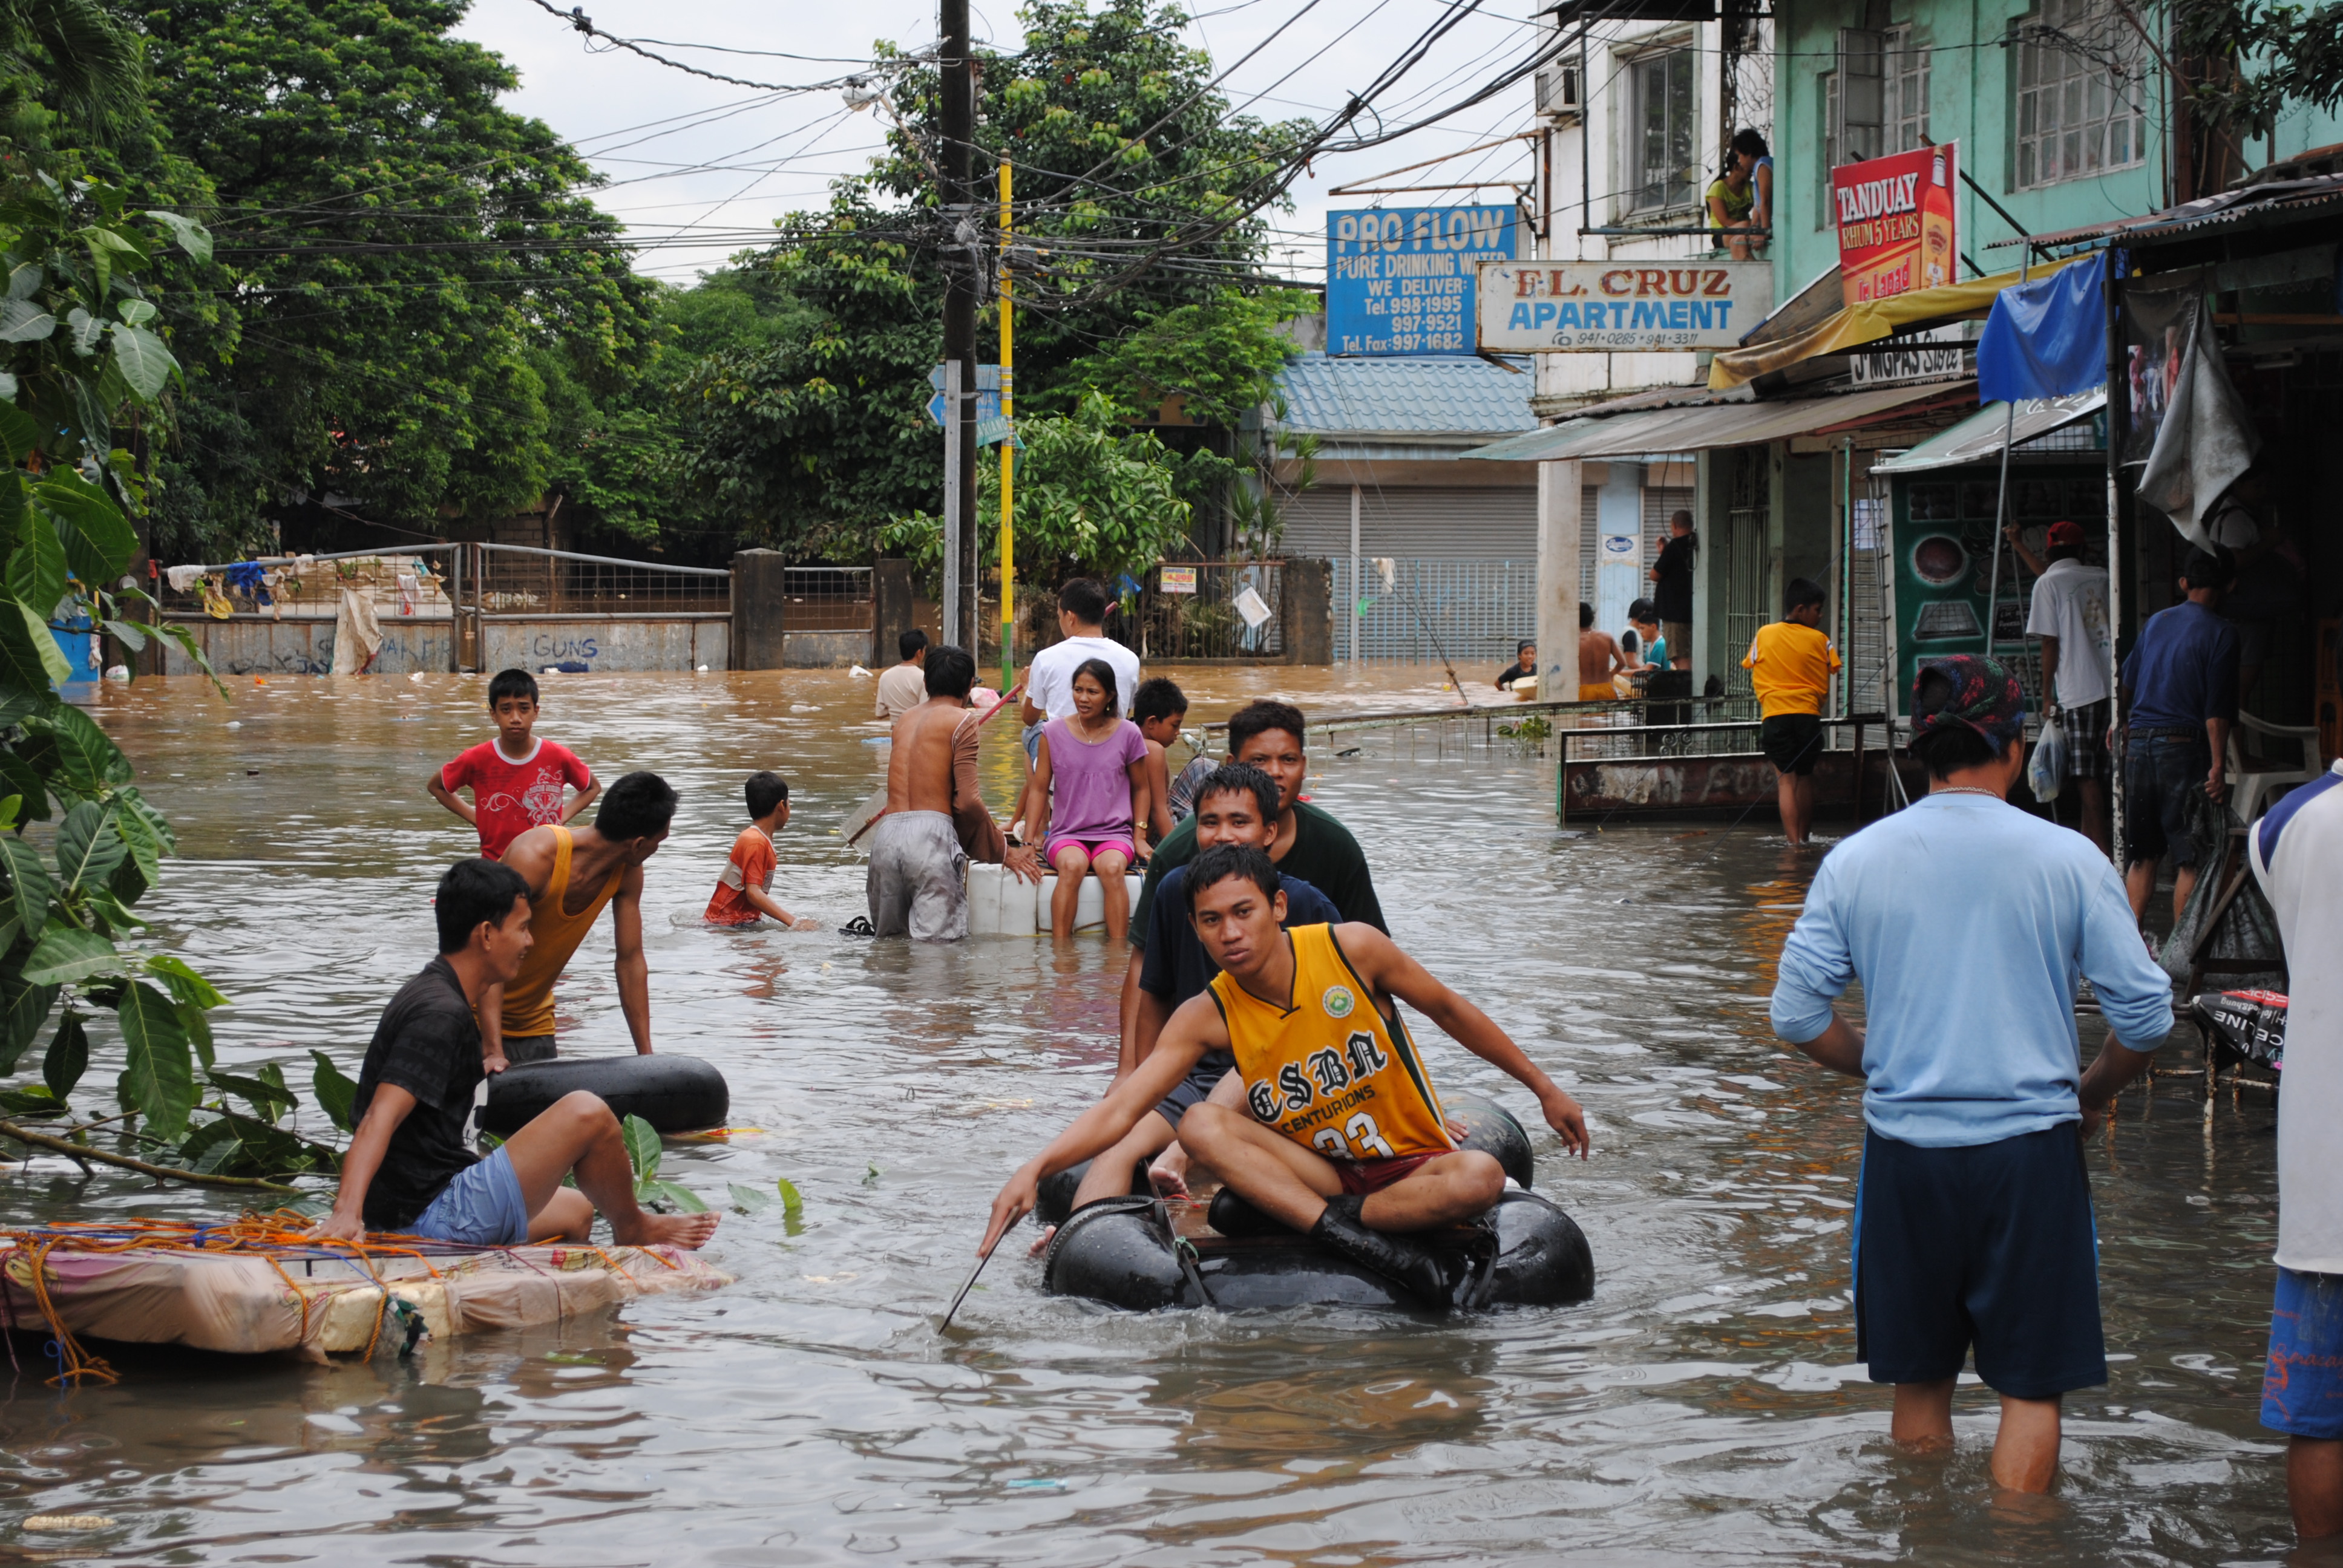 Philippines Floods: Latest News, Photos, Videos on 